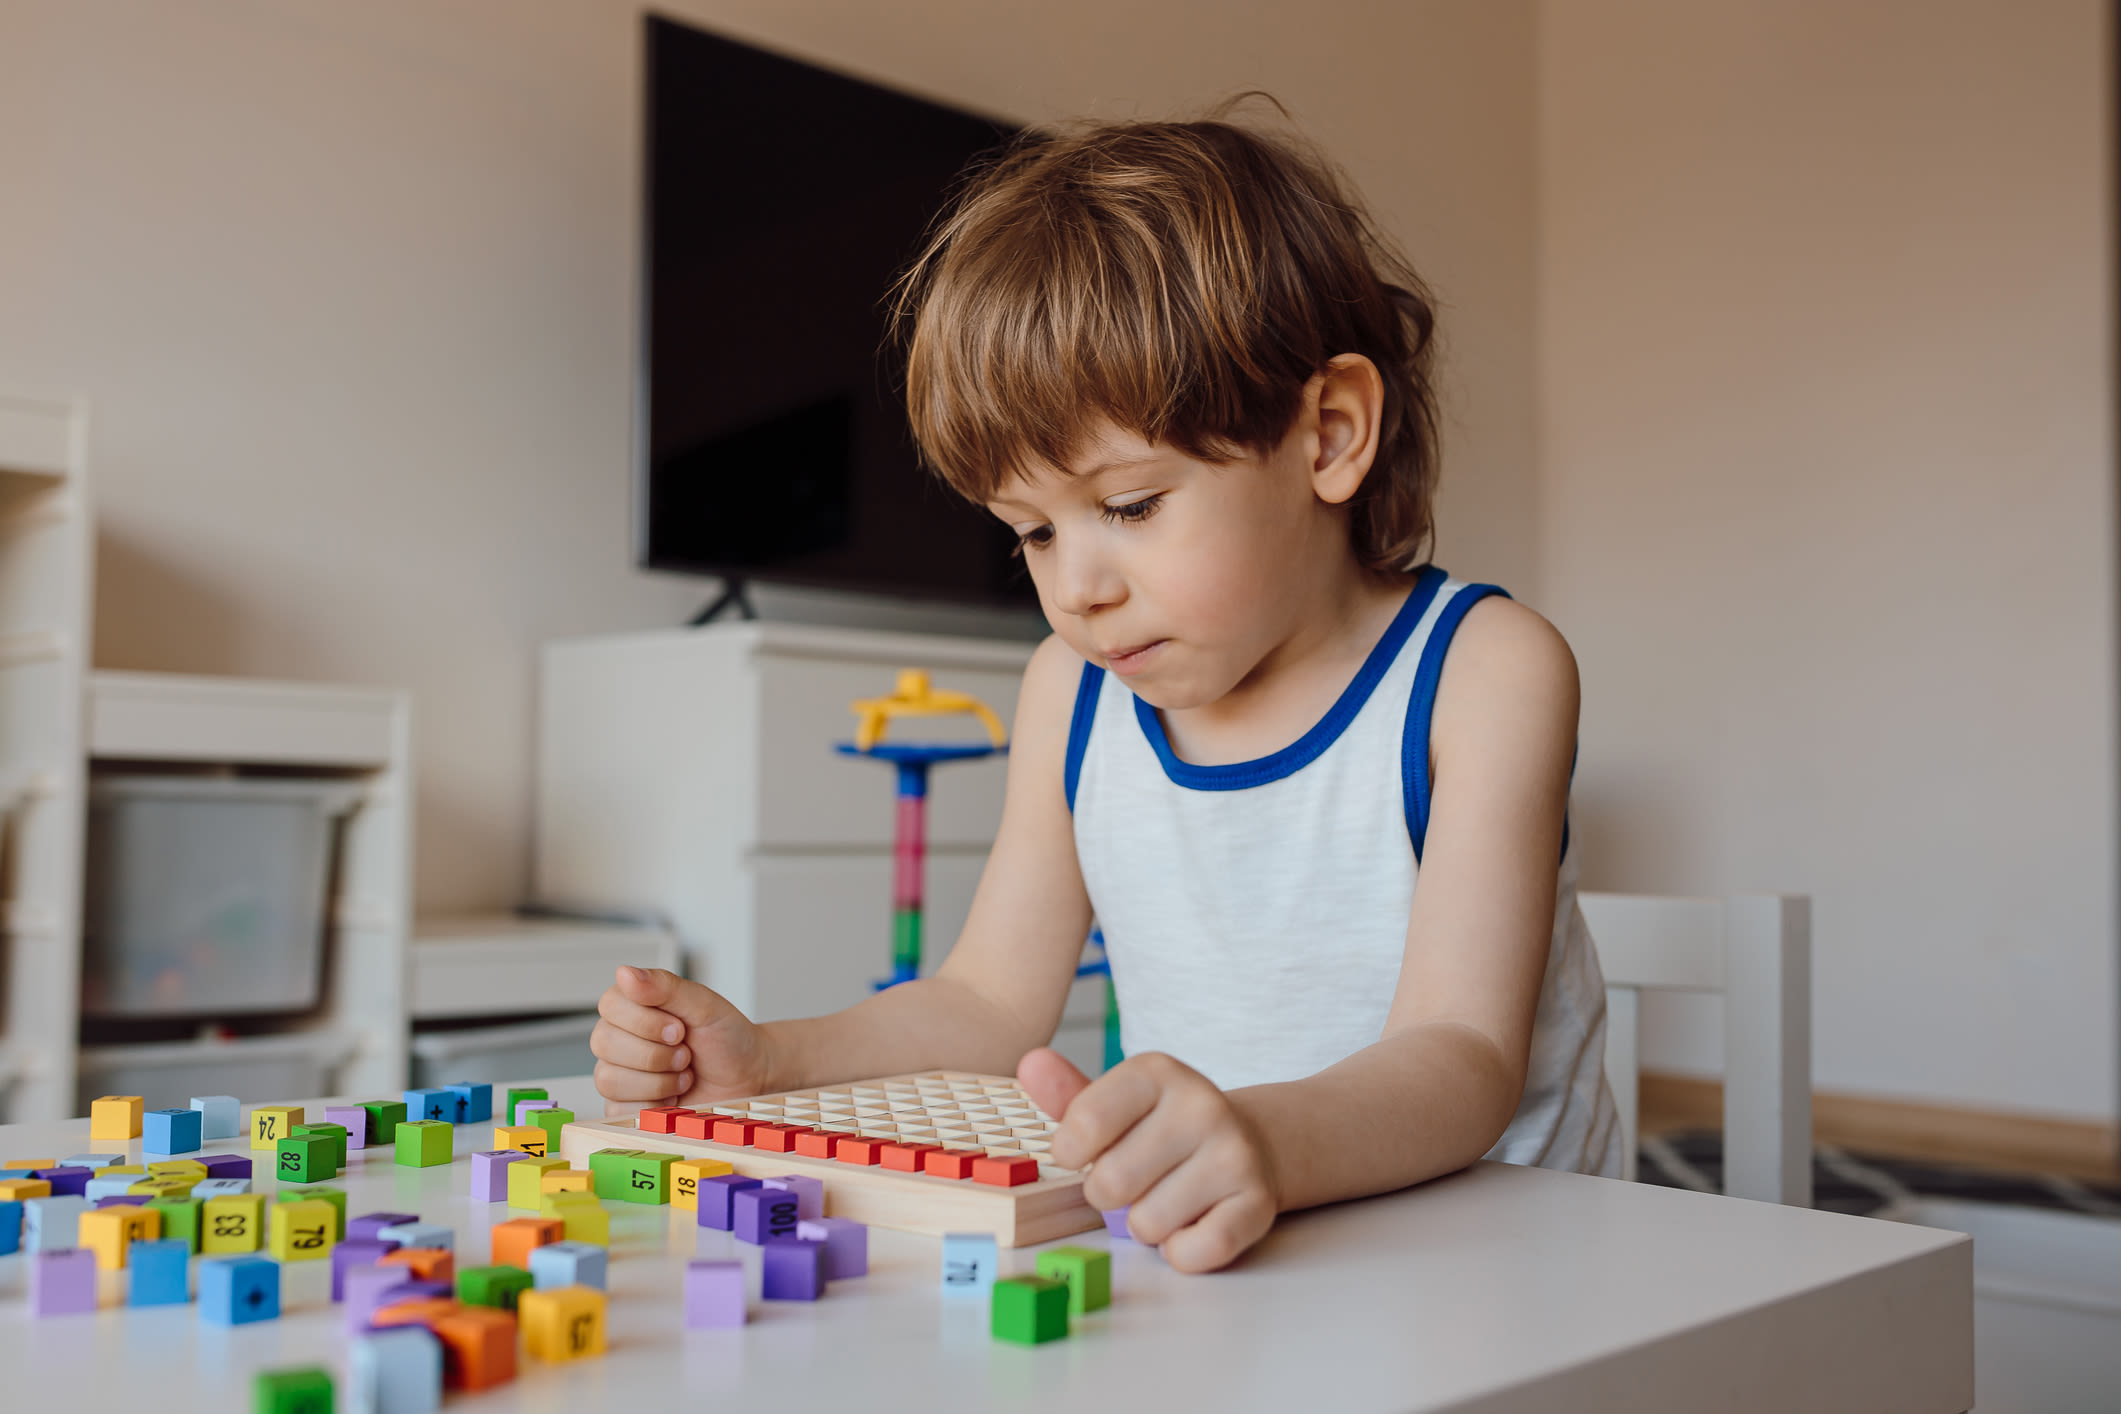 Scientists reveal how autism develops in kids